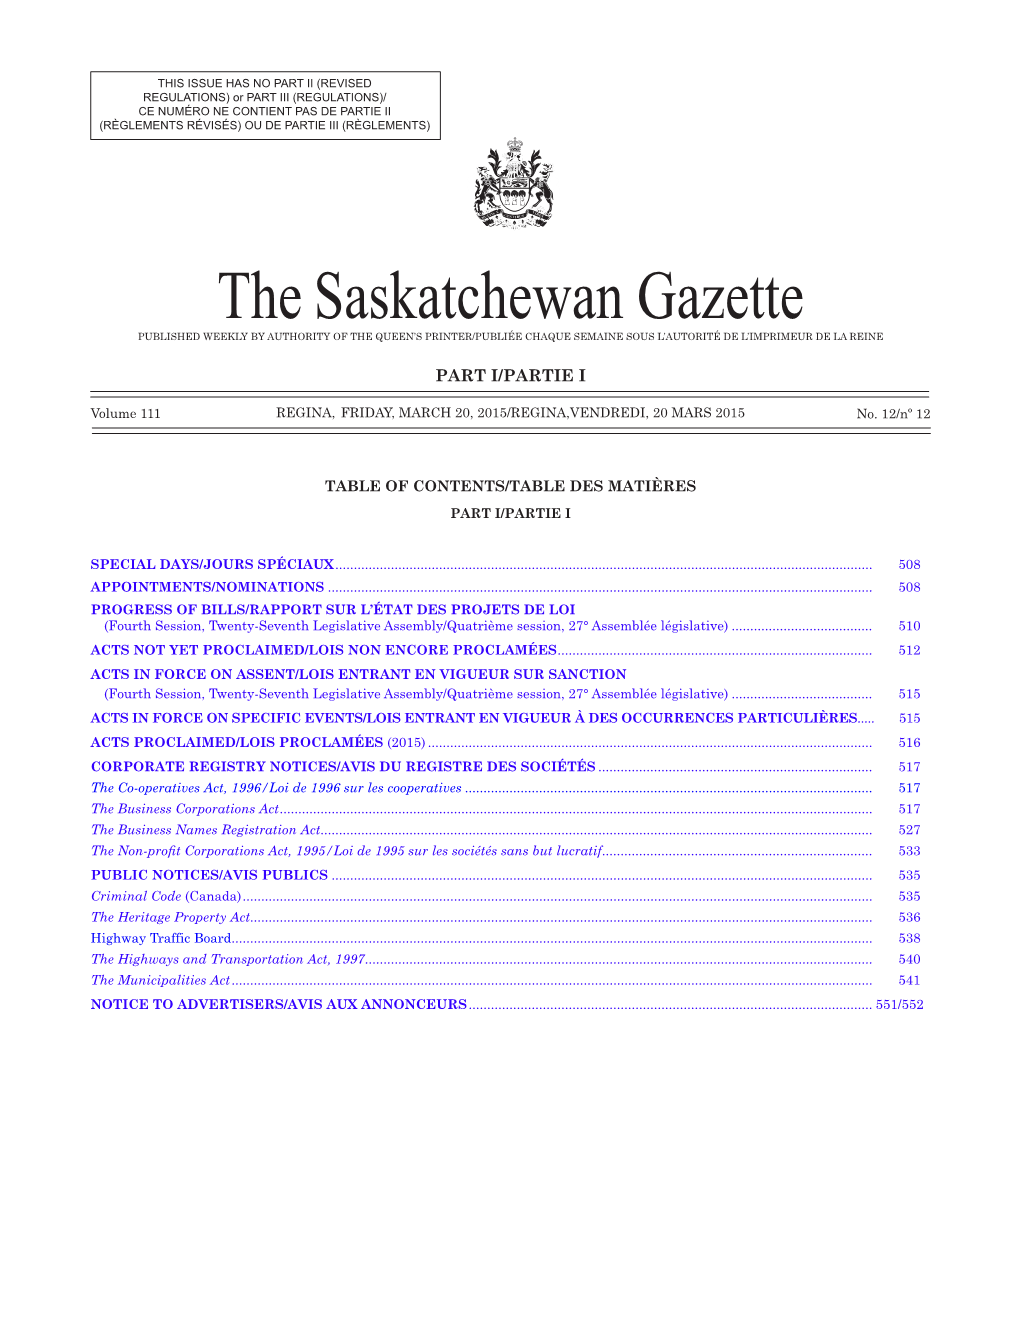 Saskatchewan-Electronic Interception